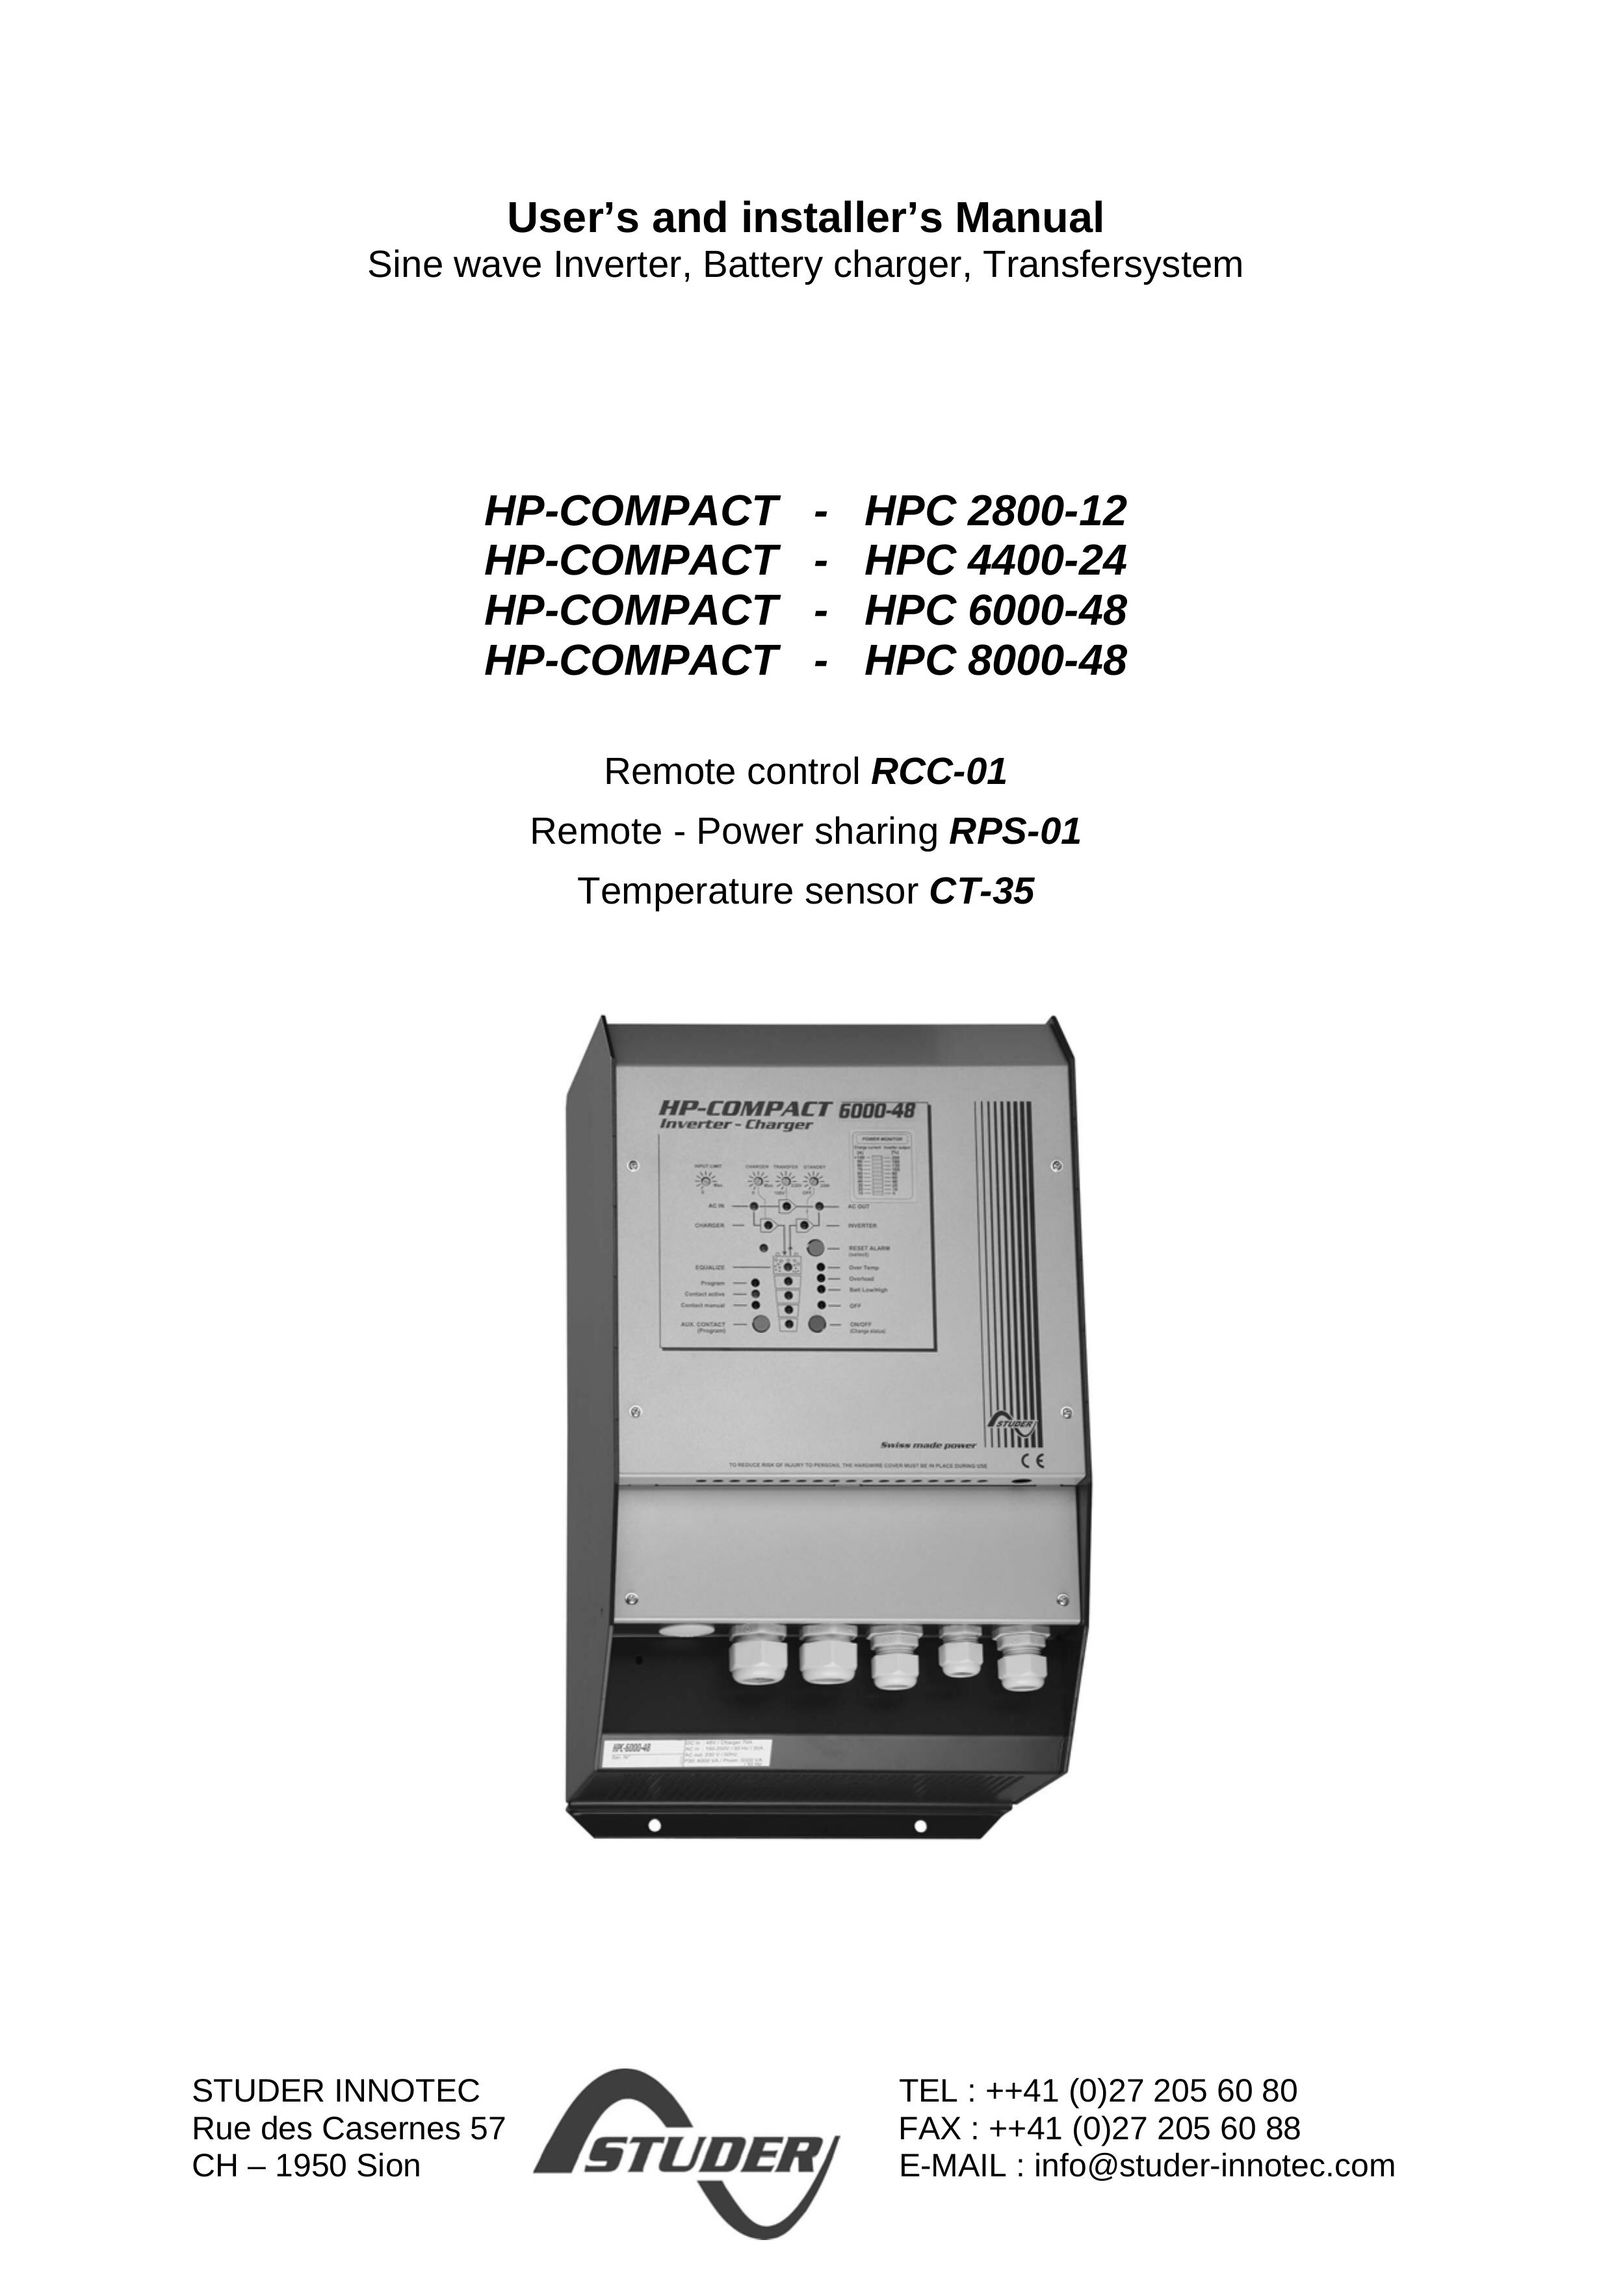 Studer Innotec HPC 2800-12, HPC 4400-24, HPC 6000-48, HPC 8000-48 Battery Charger User Manual